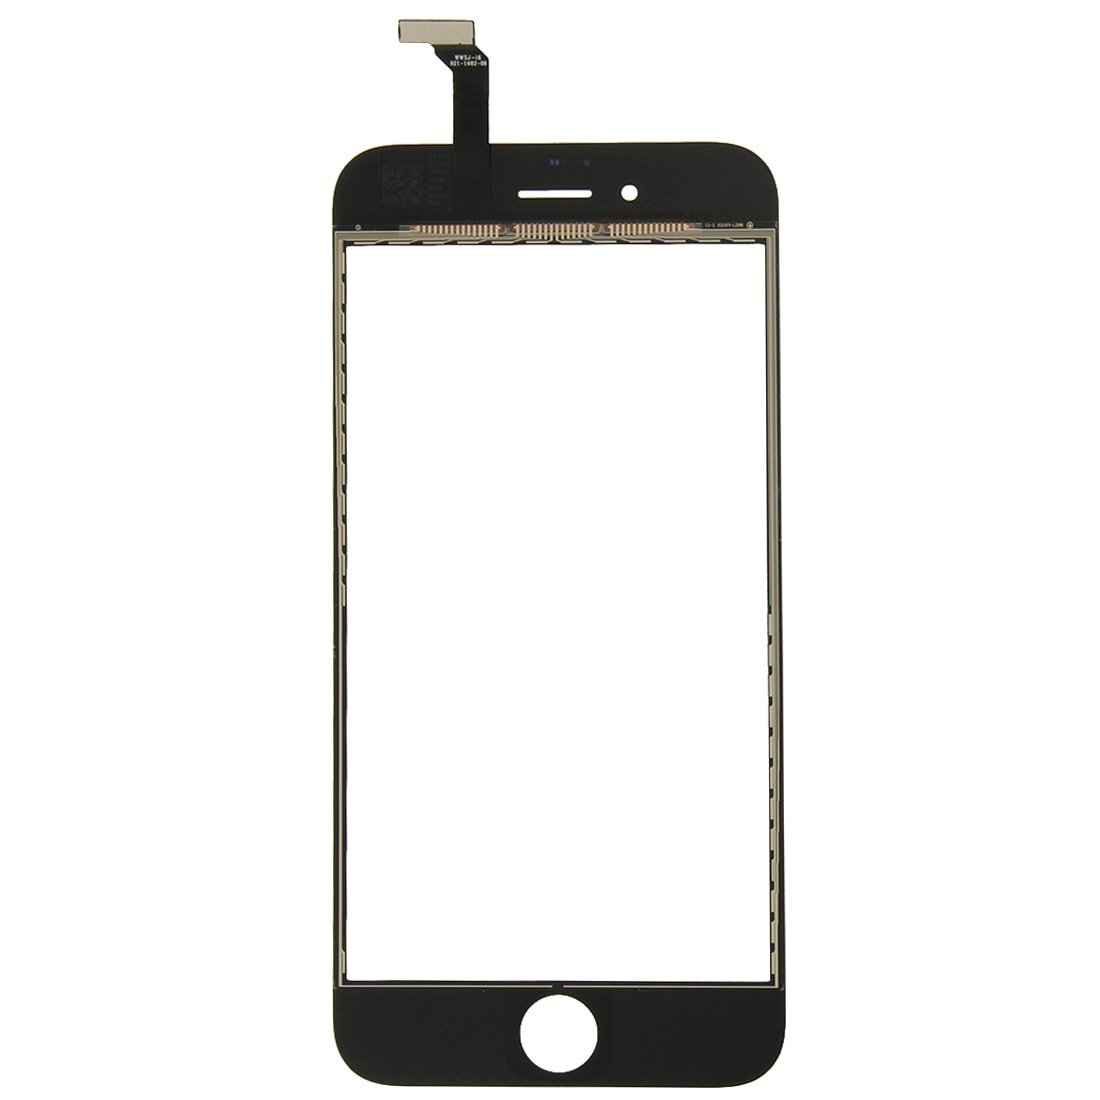 Glaslins, Touch enhet & Flexkabel iPhone 6 - svart färg